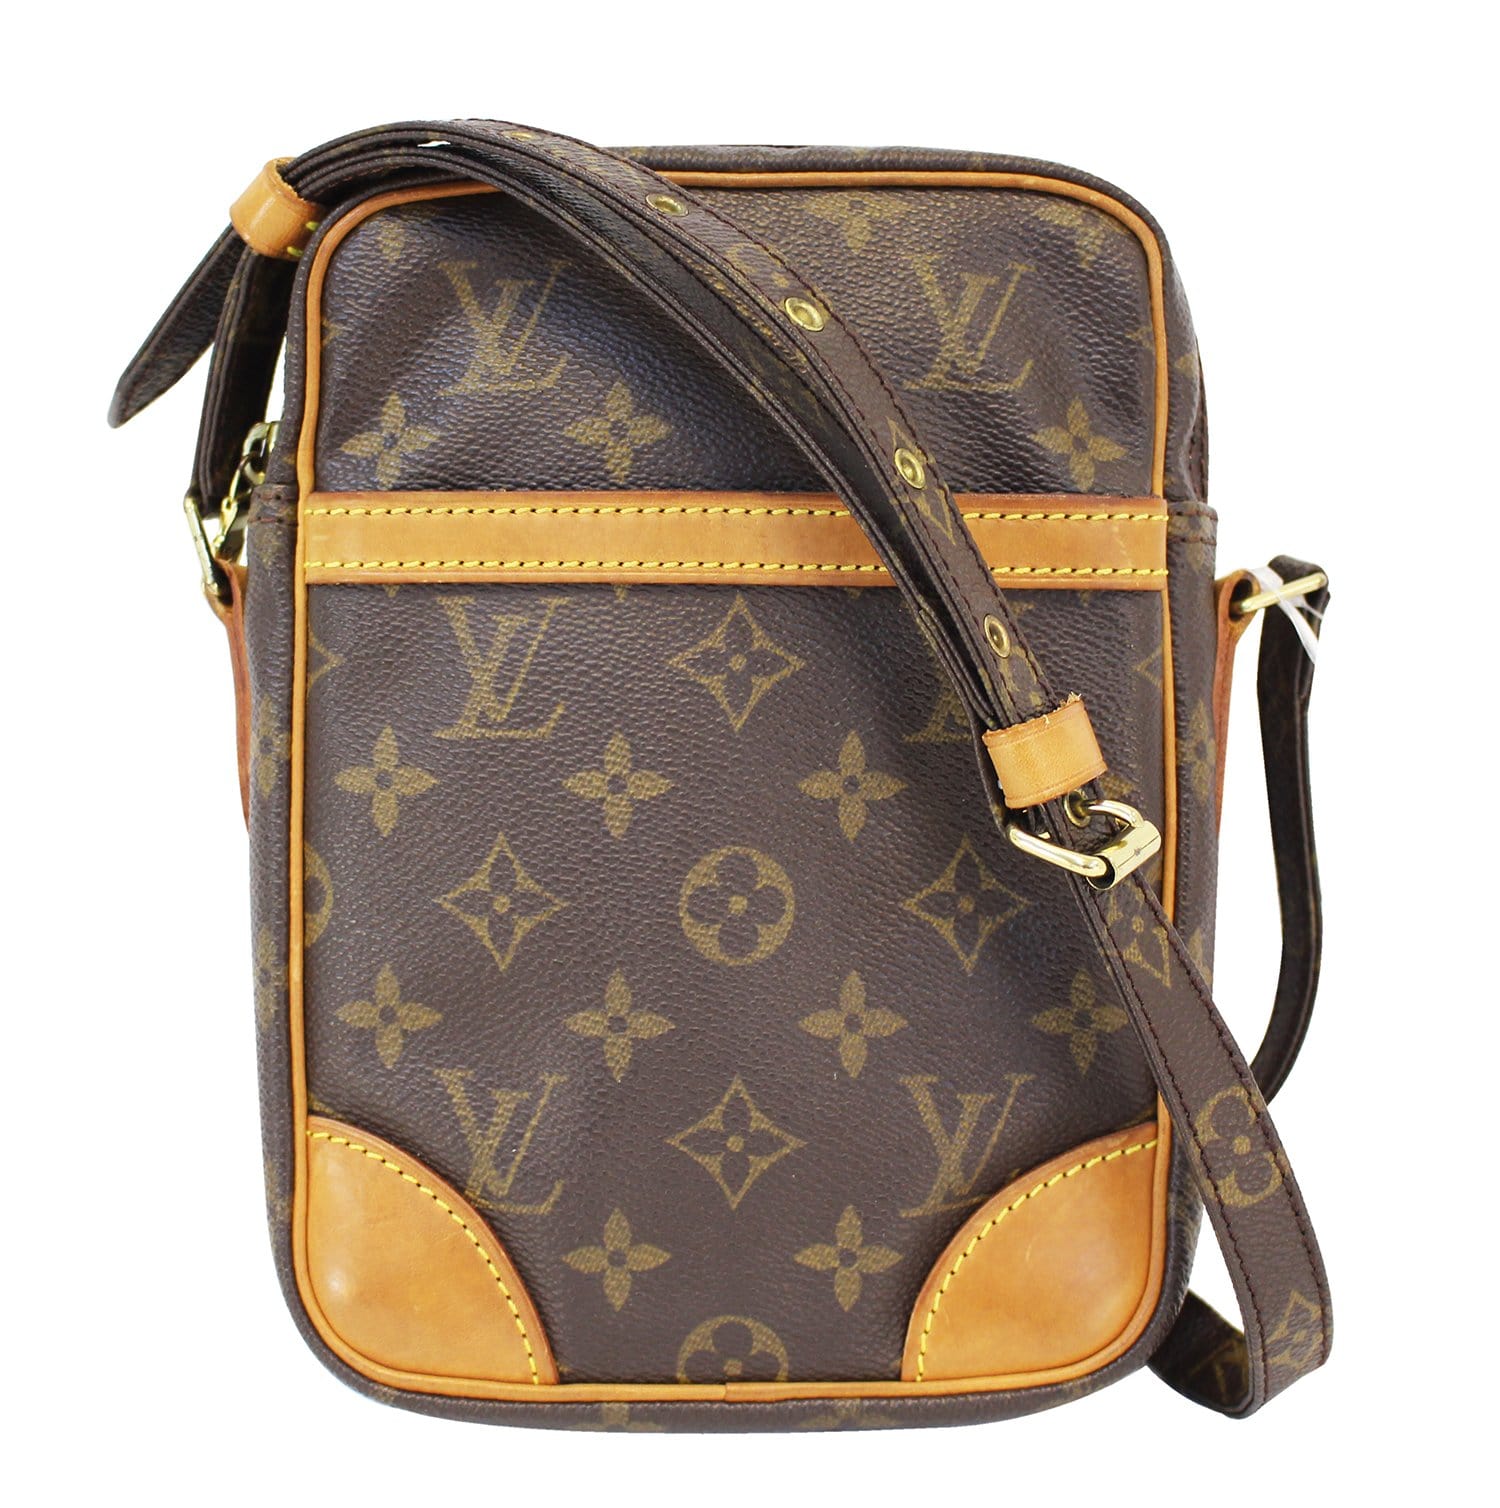 Small Crossbody Bags For Women Multipurpose Golden Zippy Handbags